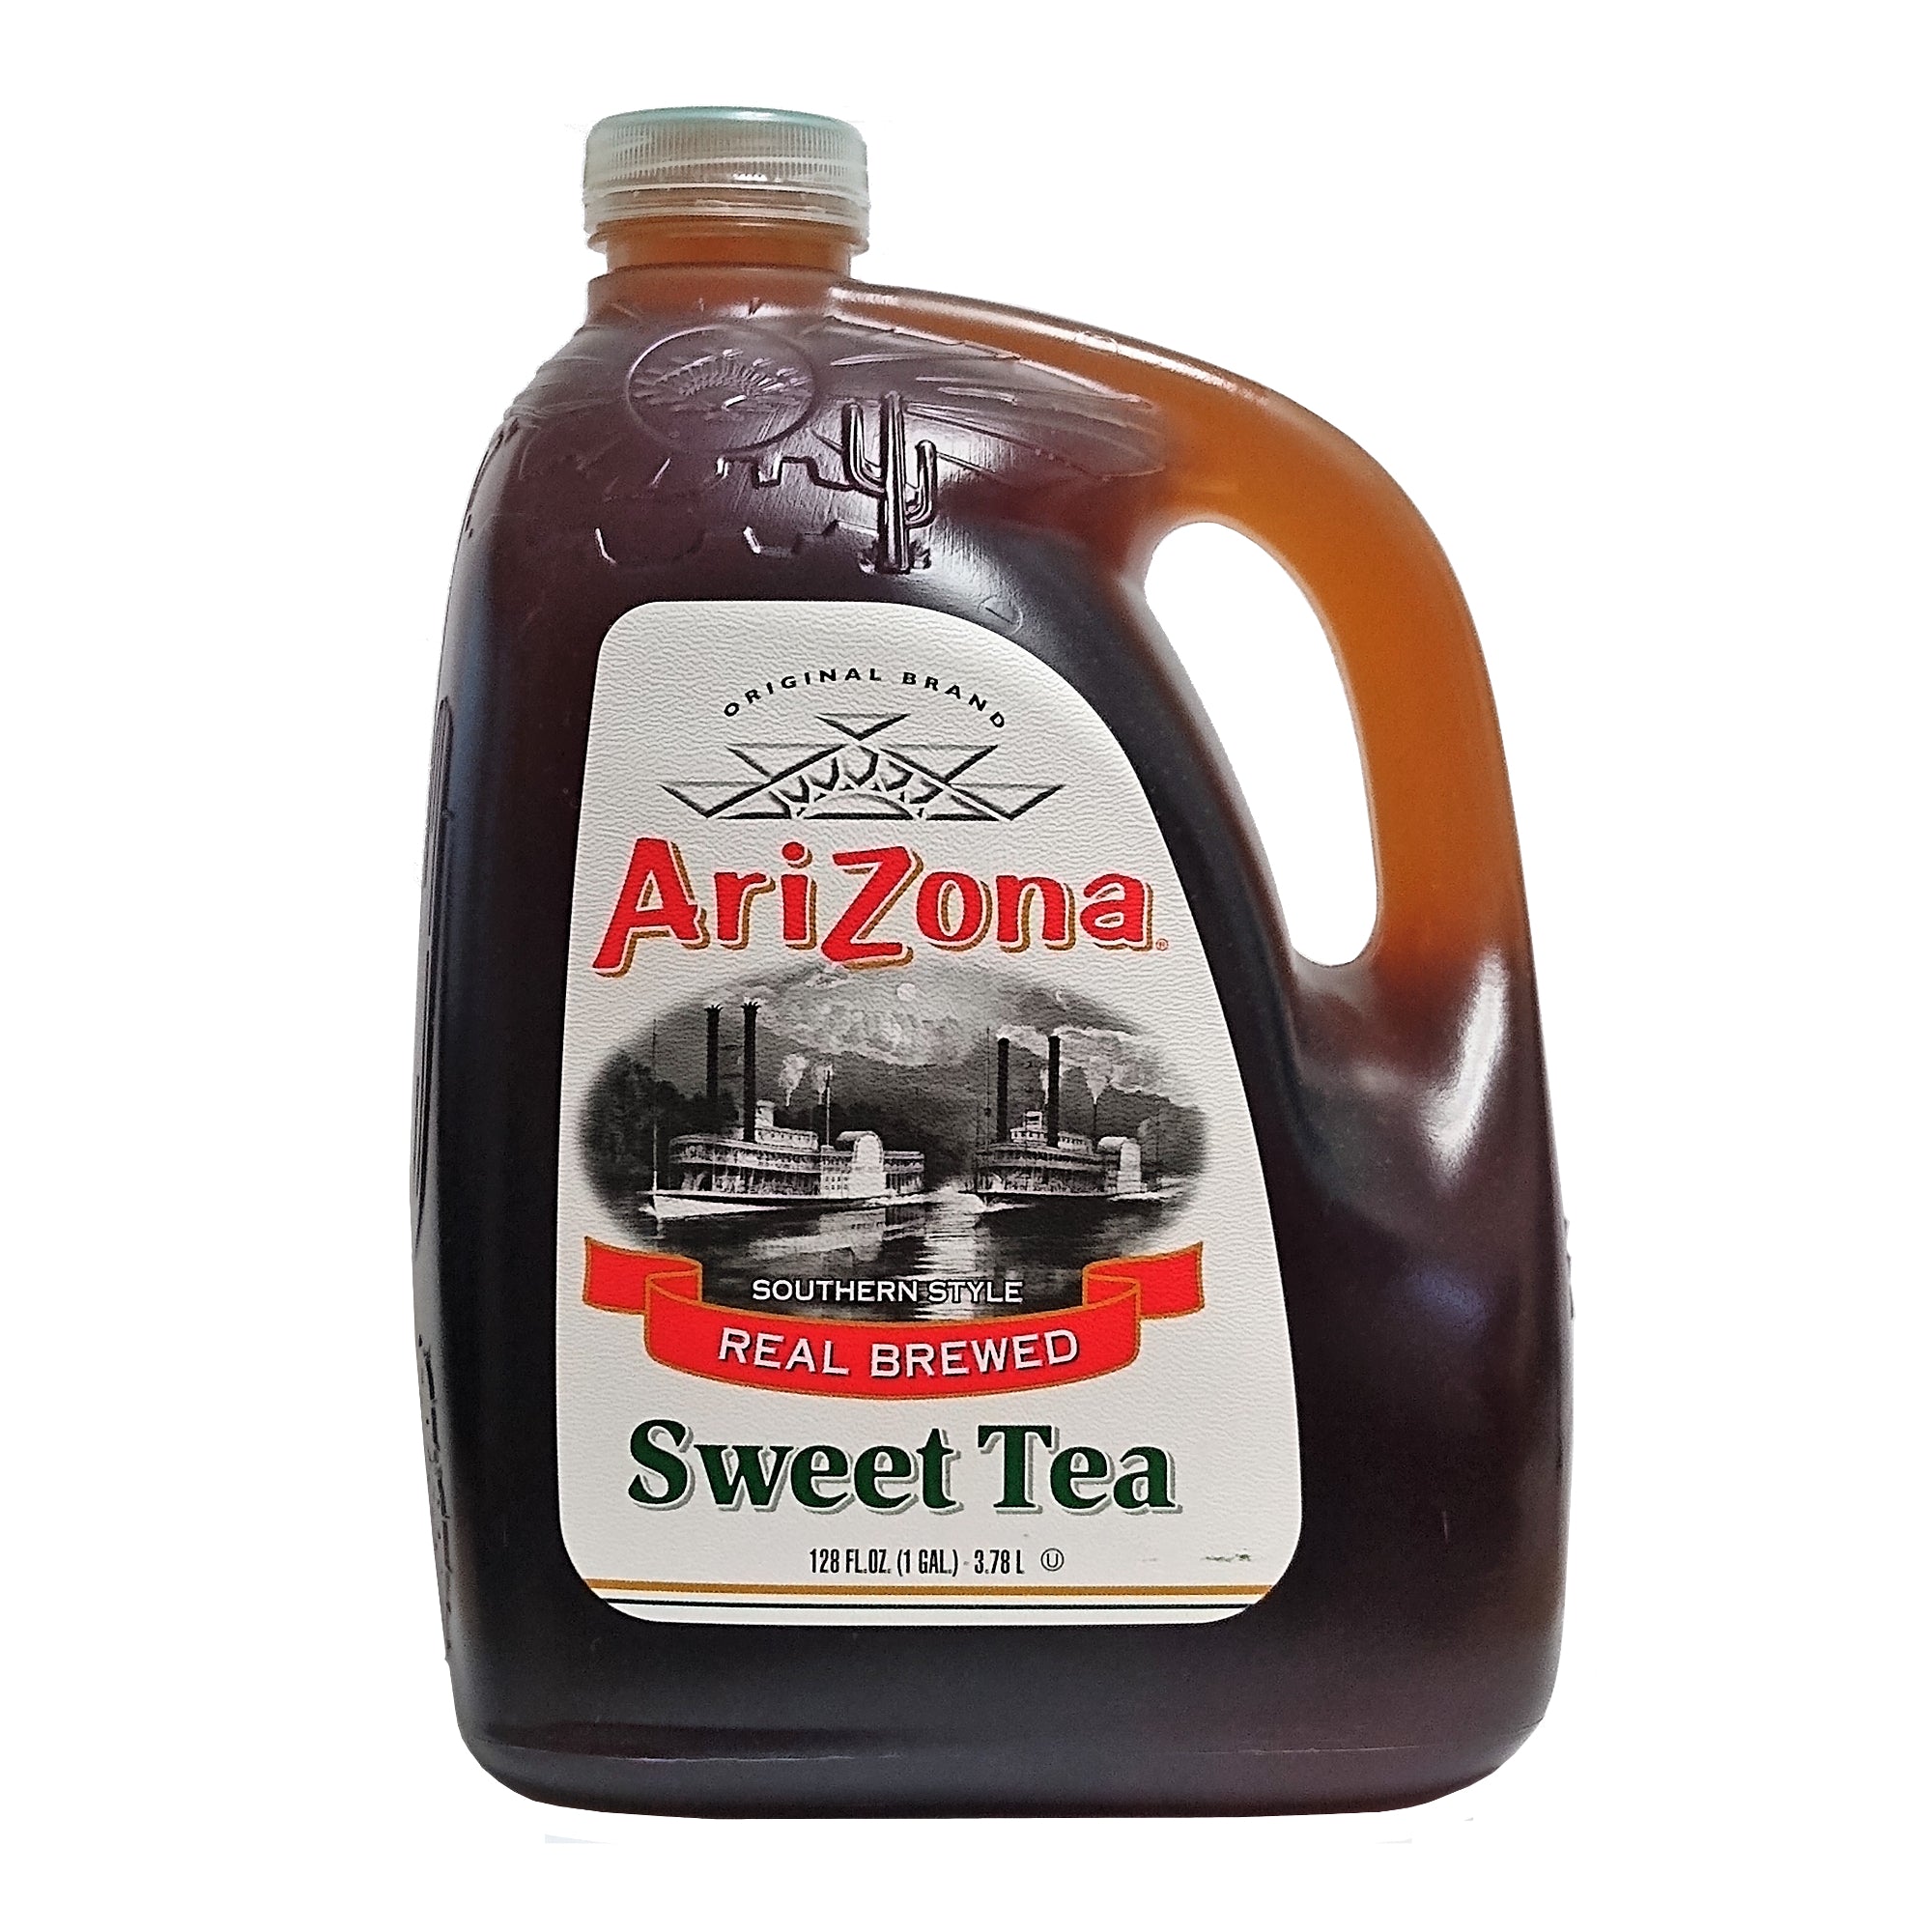 Arizona Sweet Tea, Southern Style - 128 fl oz